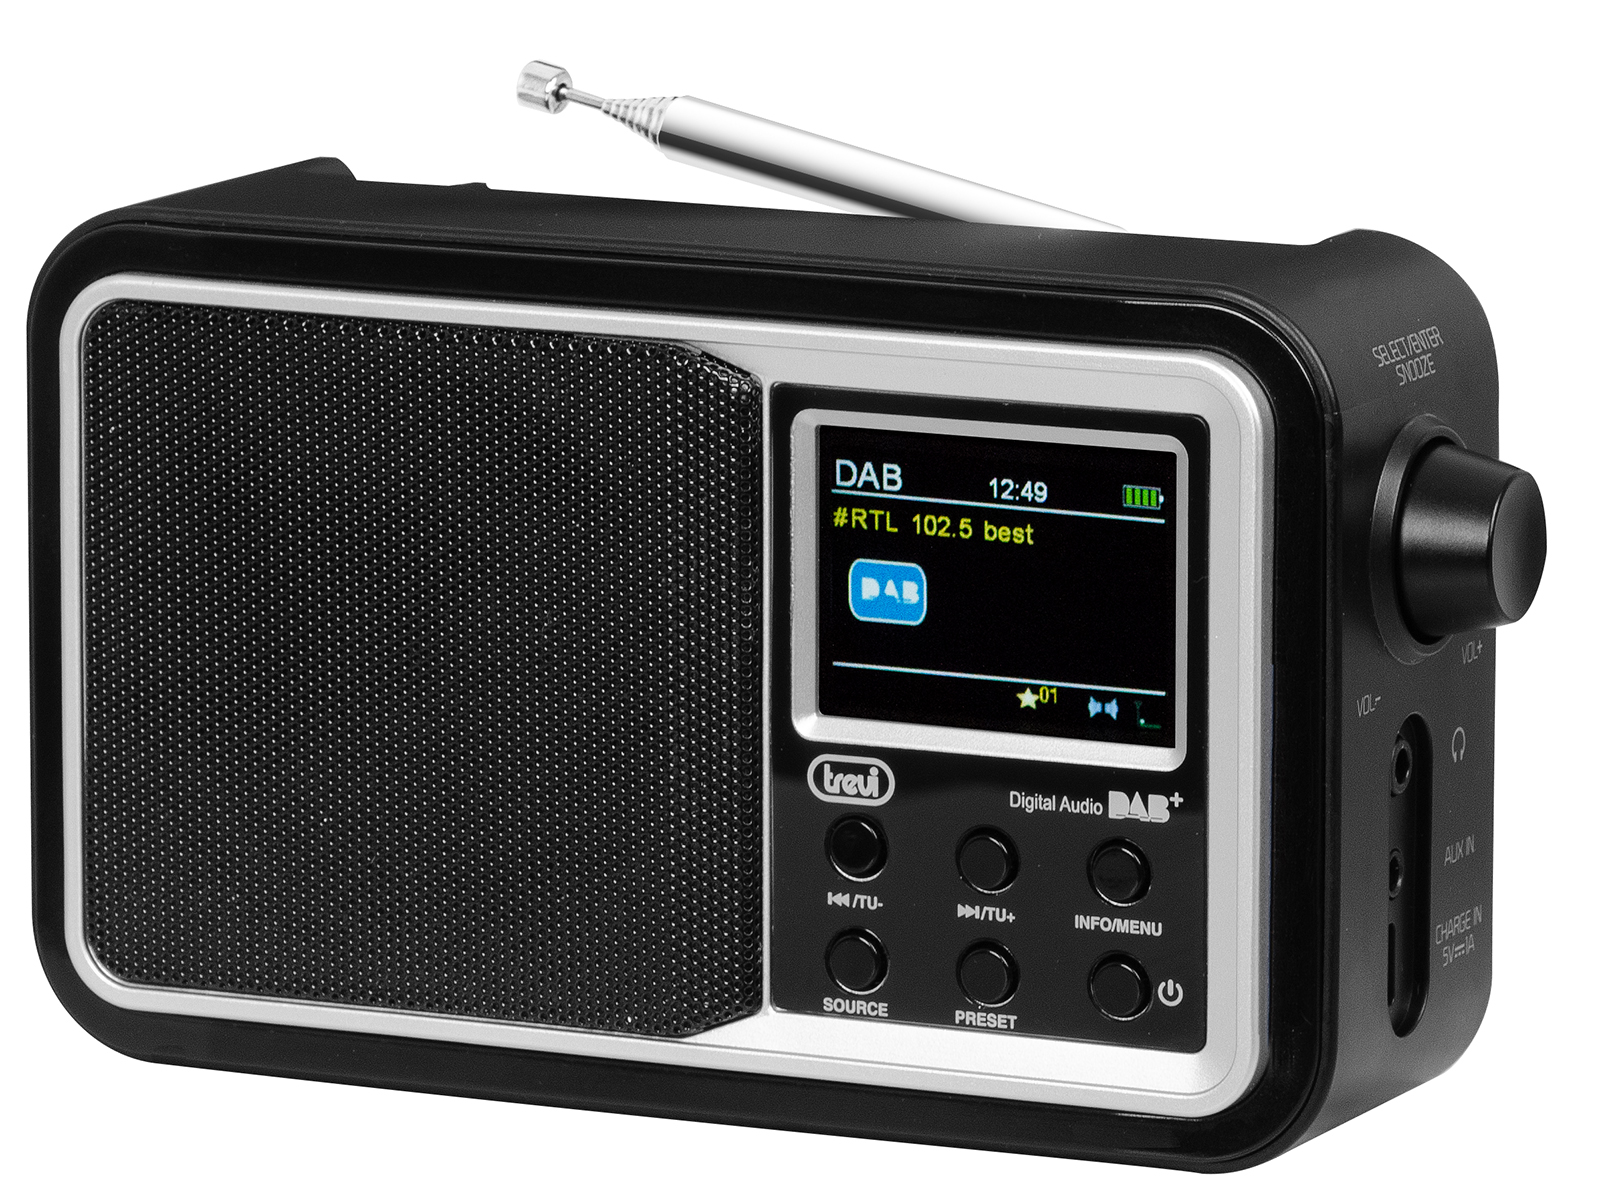 Trevi - Radio Portatile con Ricevitore Digitale DAB/DAB+ FM RDS DAB 7F96 R